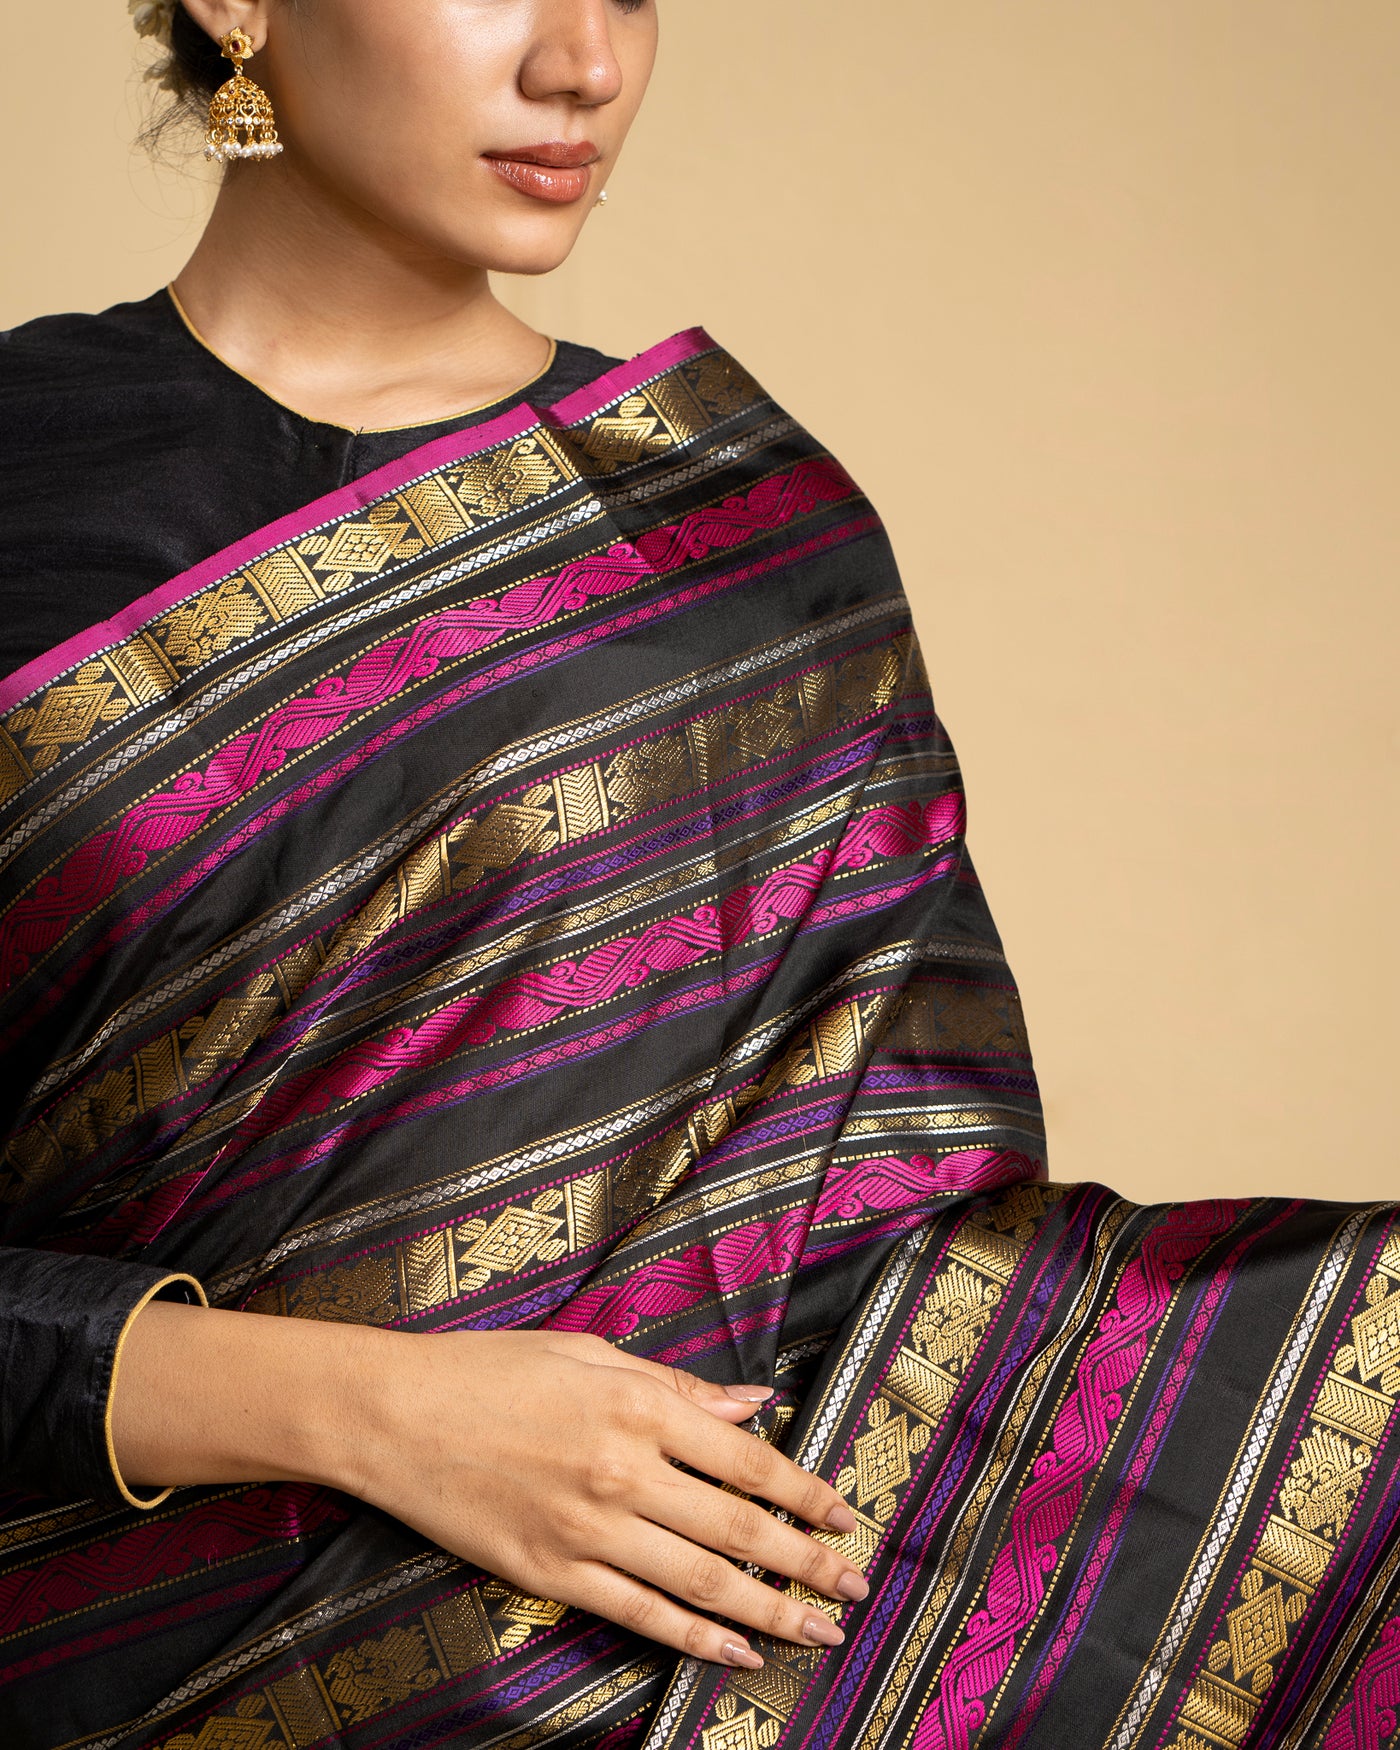 Black Varisaipettu Pure Zari Heirloom Kanchipuram Silk Saree - Clio Silks